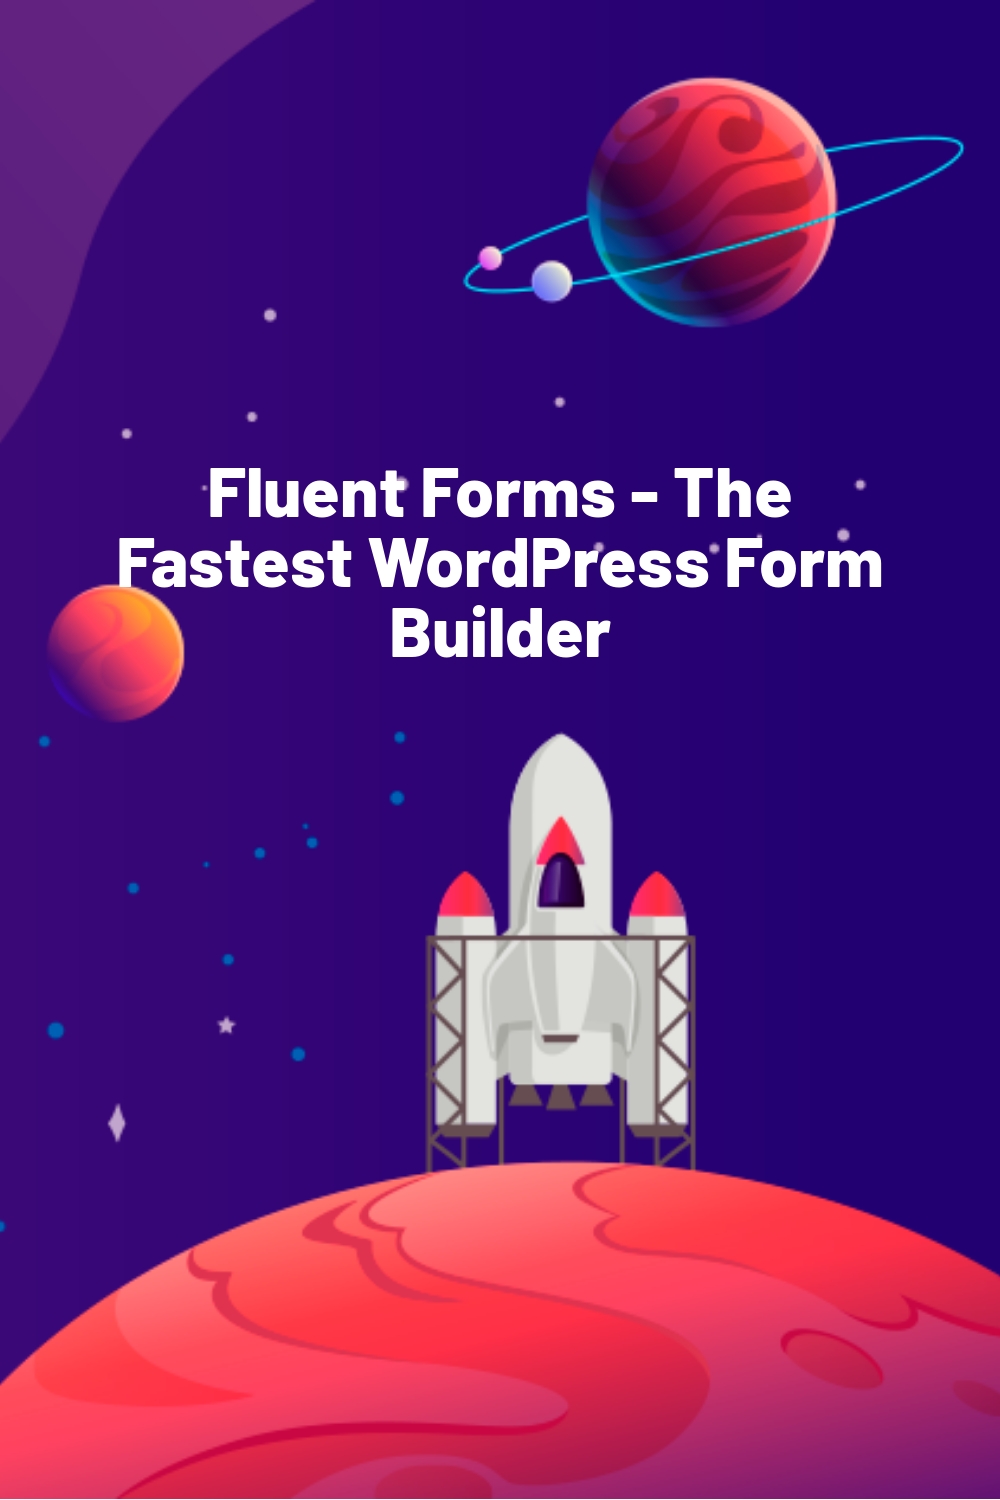 Fluent Forms – The Fastest WordPress Form Builder